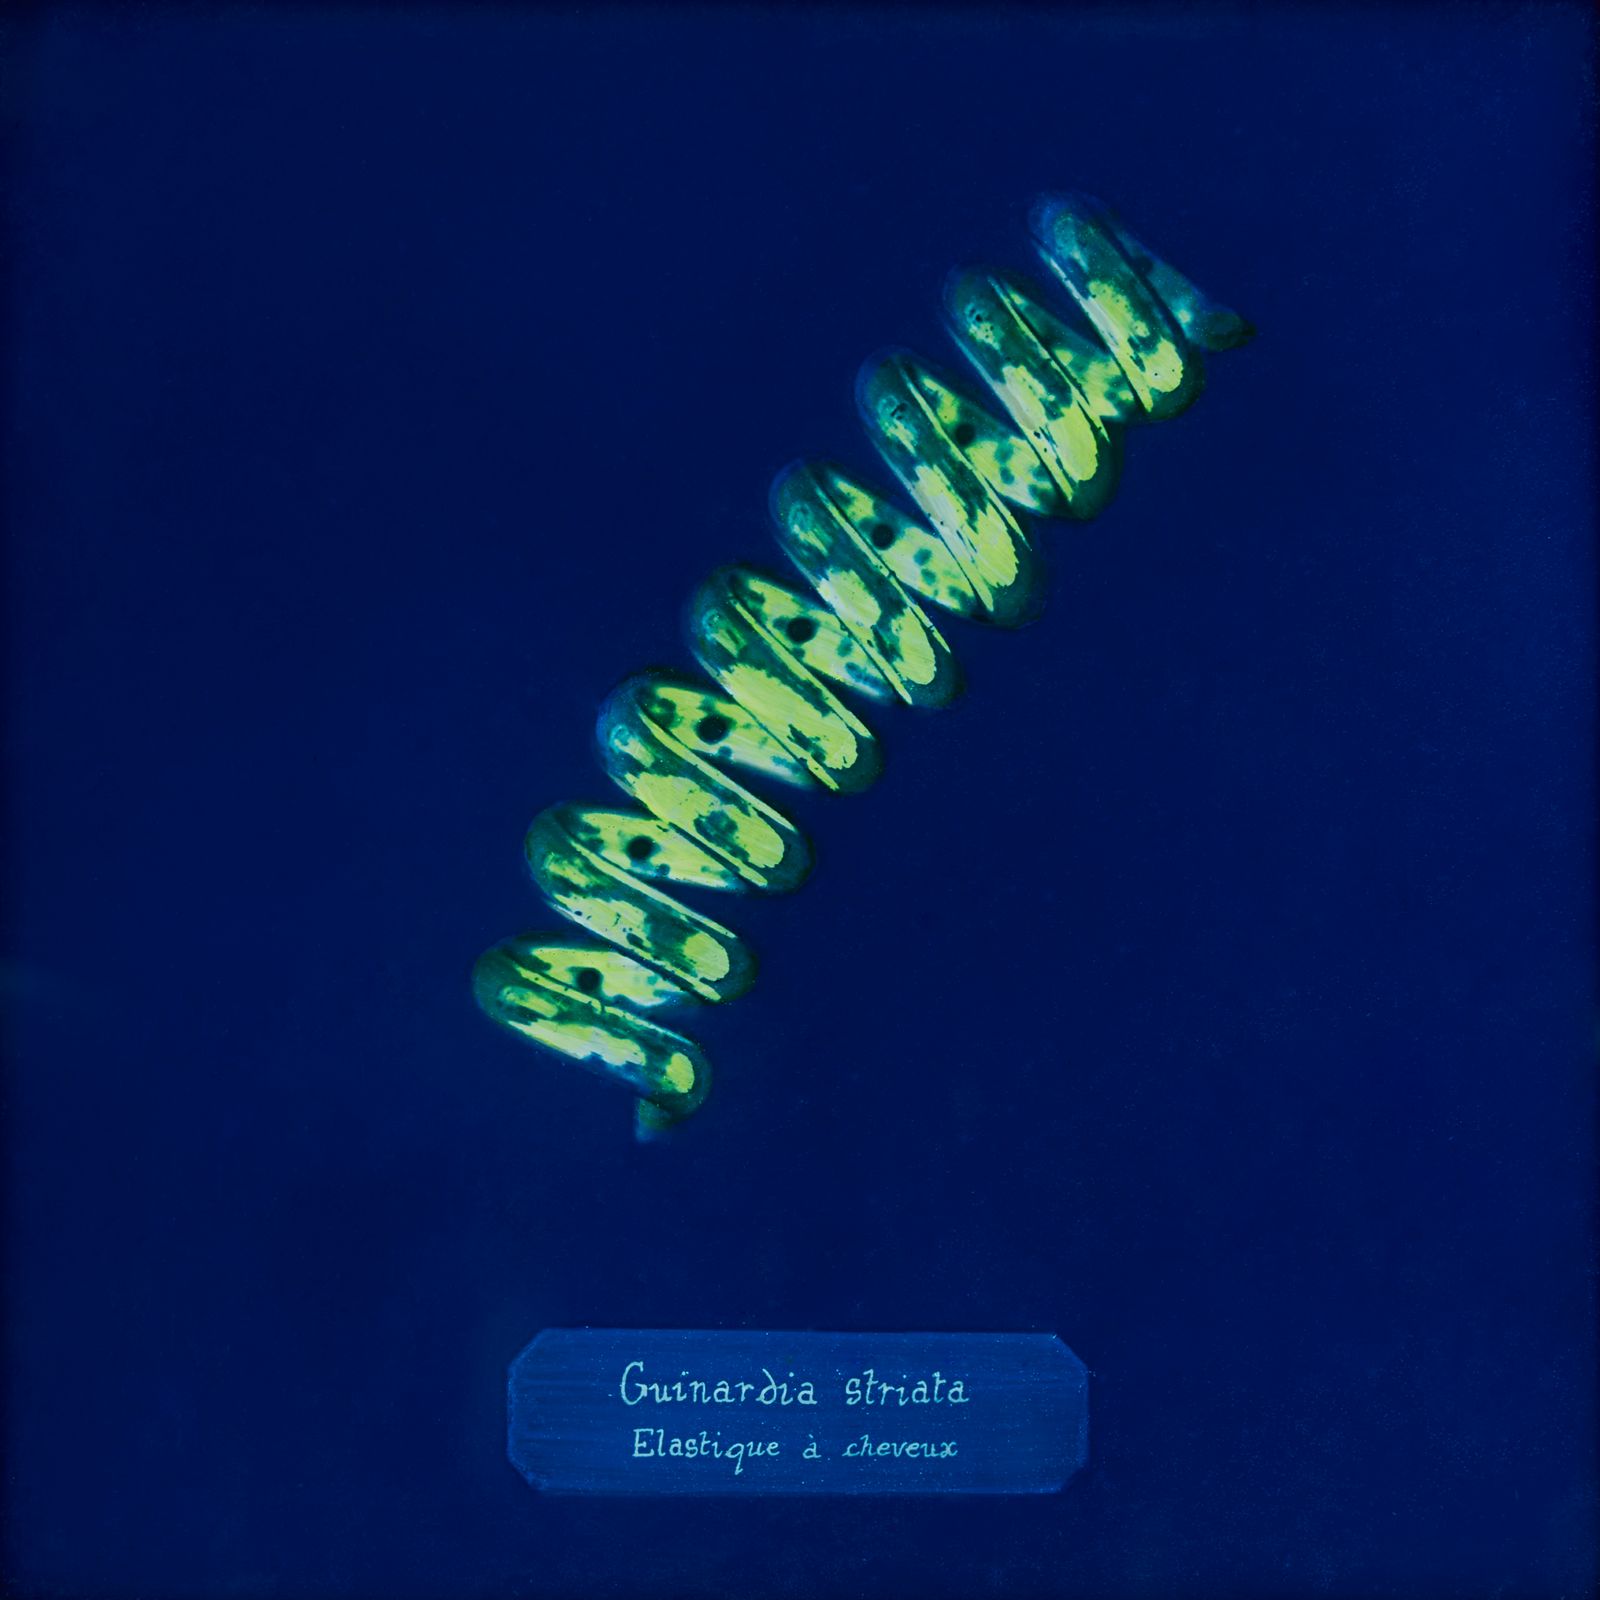 © Manon Lanjouère - hair elastic. cyanotype on glass and fluo vinyl emulsion, 20x20cm